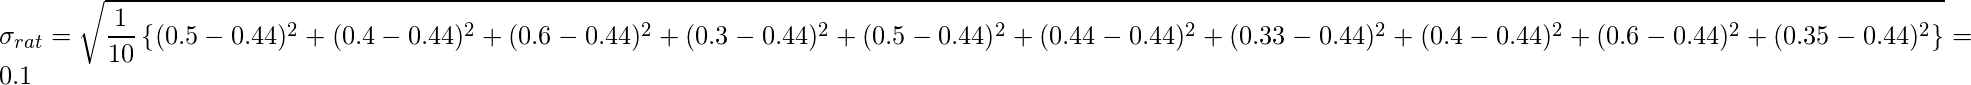  \displaystyle \sigma_{rat} = \sqrt{\frac{1}{10} \left\{ (0.5-0.44)^2 + (0.4-0.44)^2 + (0.6-0.44)^2 + (0.3-0.44)^2 + (0.5-0.44)^2 + (0.44-0.44)^2 + (0.33-0.44)^2 + (0.4-0.44)^2 + (0.6-0.44)^2 + (0.35-0.44)^2 \right\} } = 0.1 